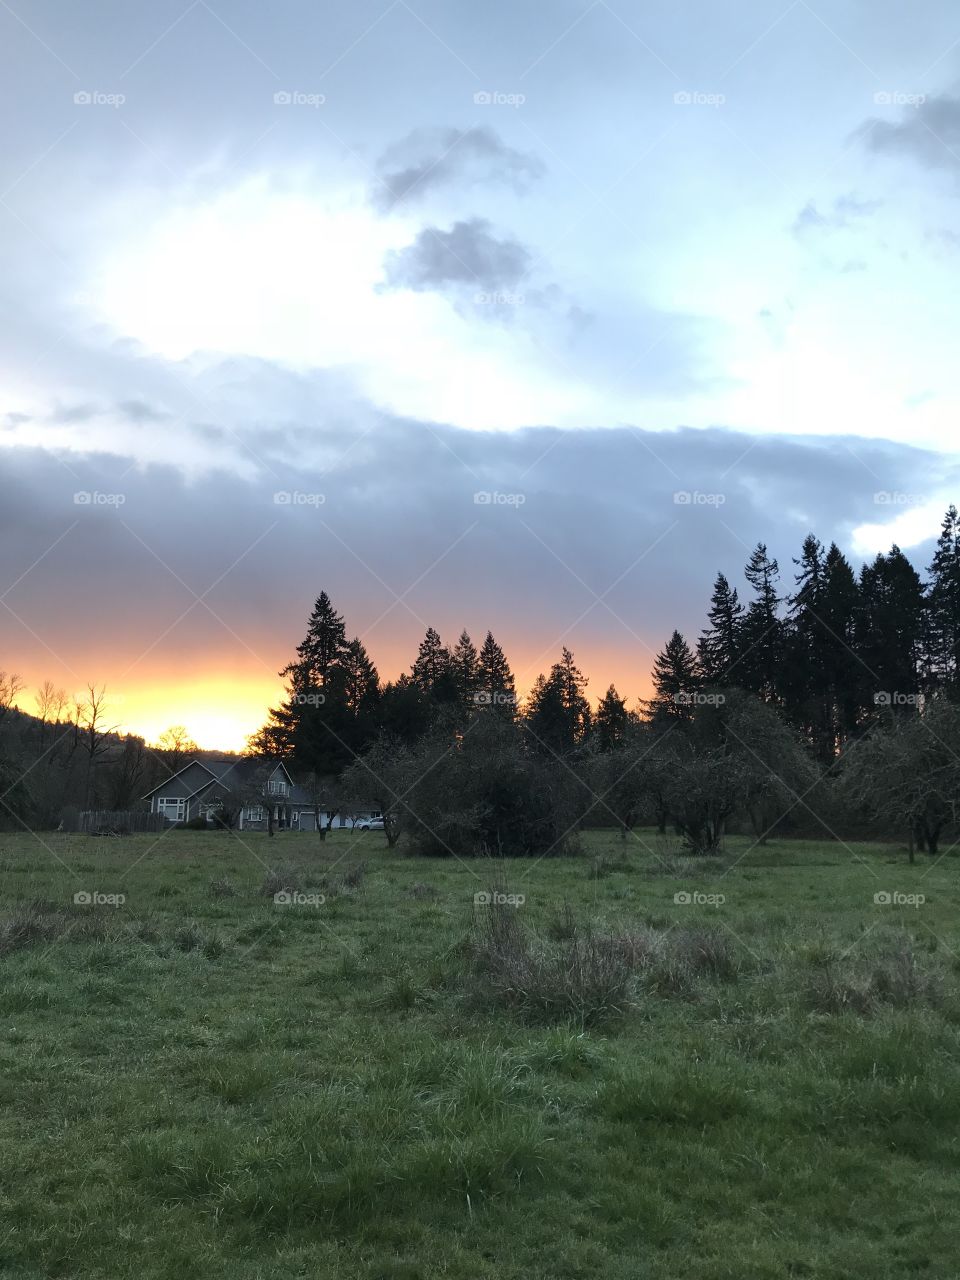 Oregon Sunrise Over the Pines